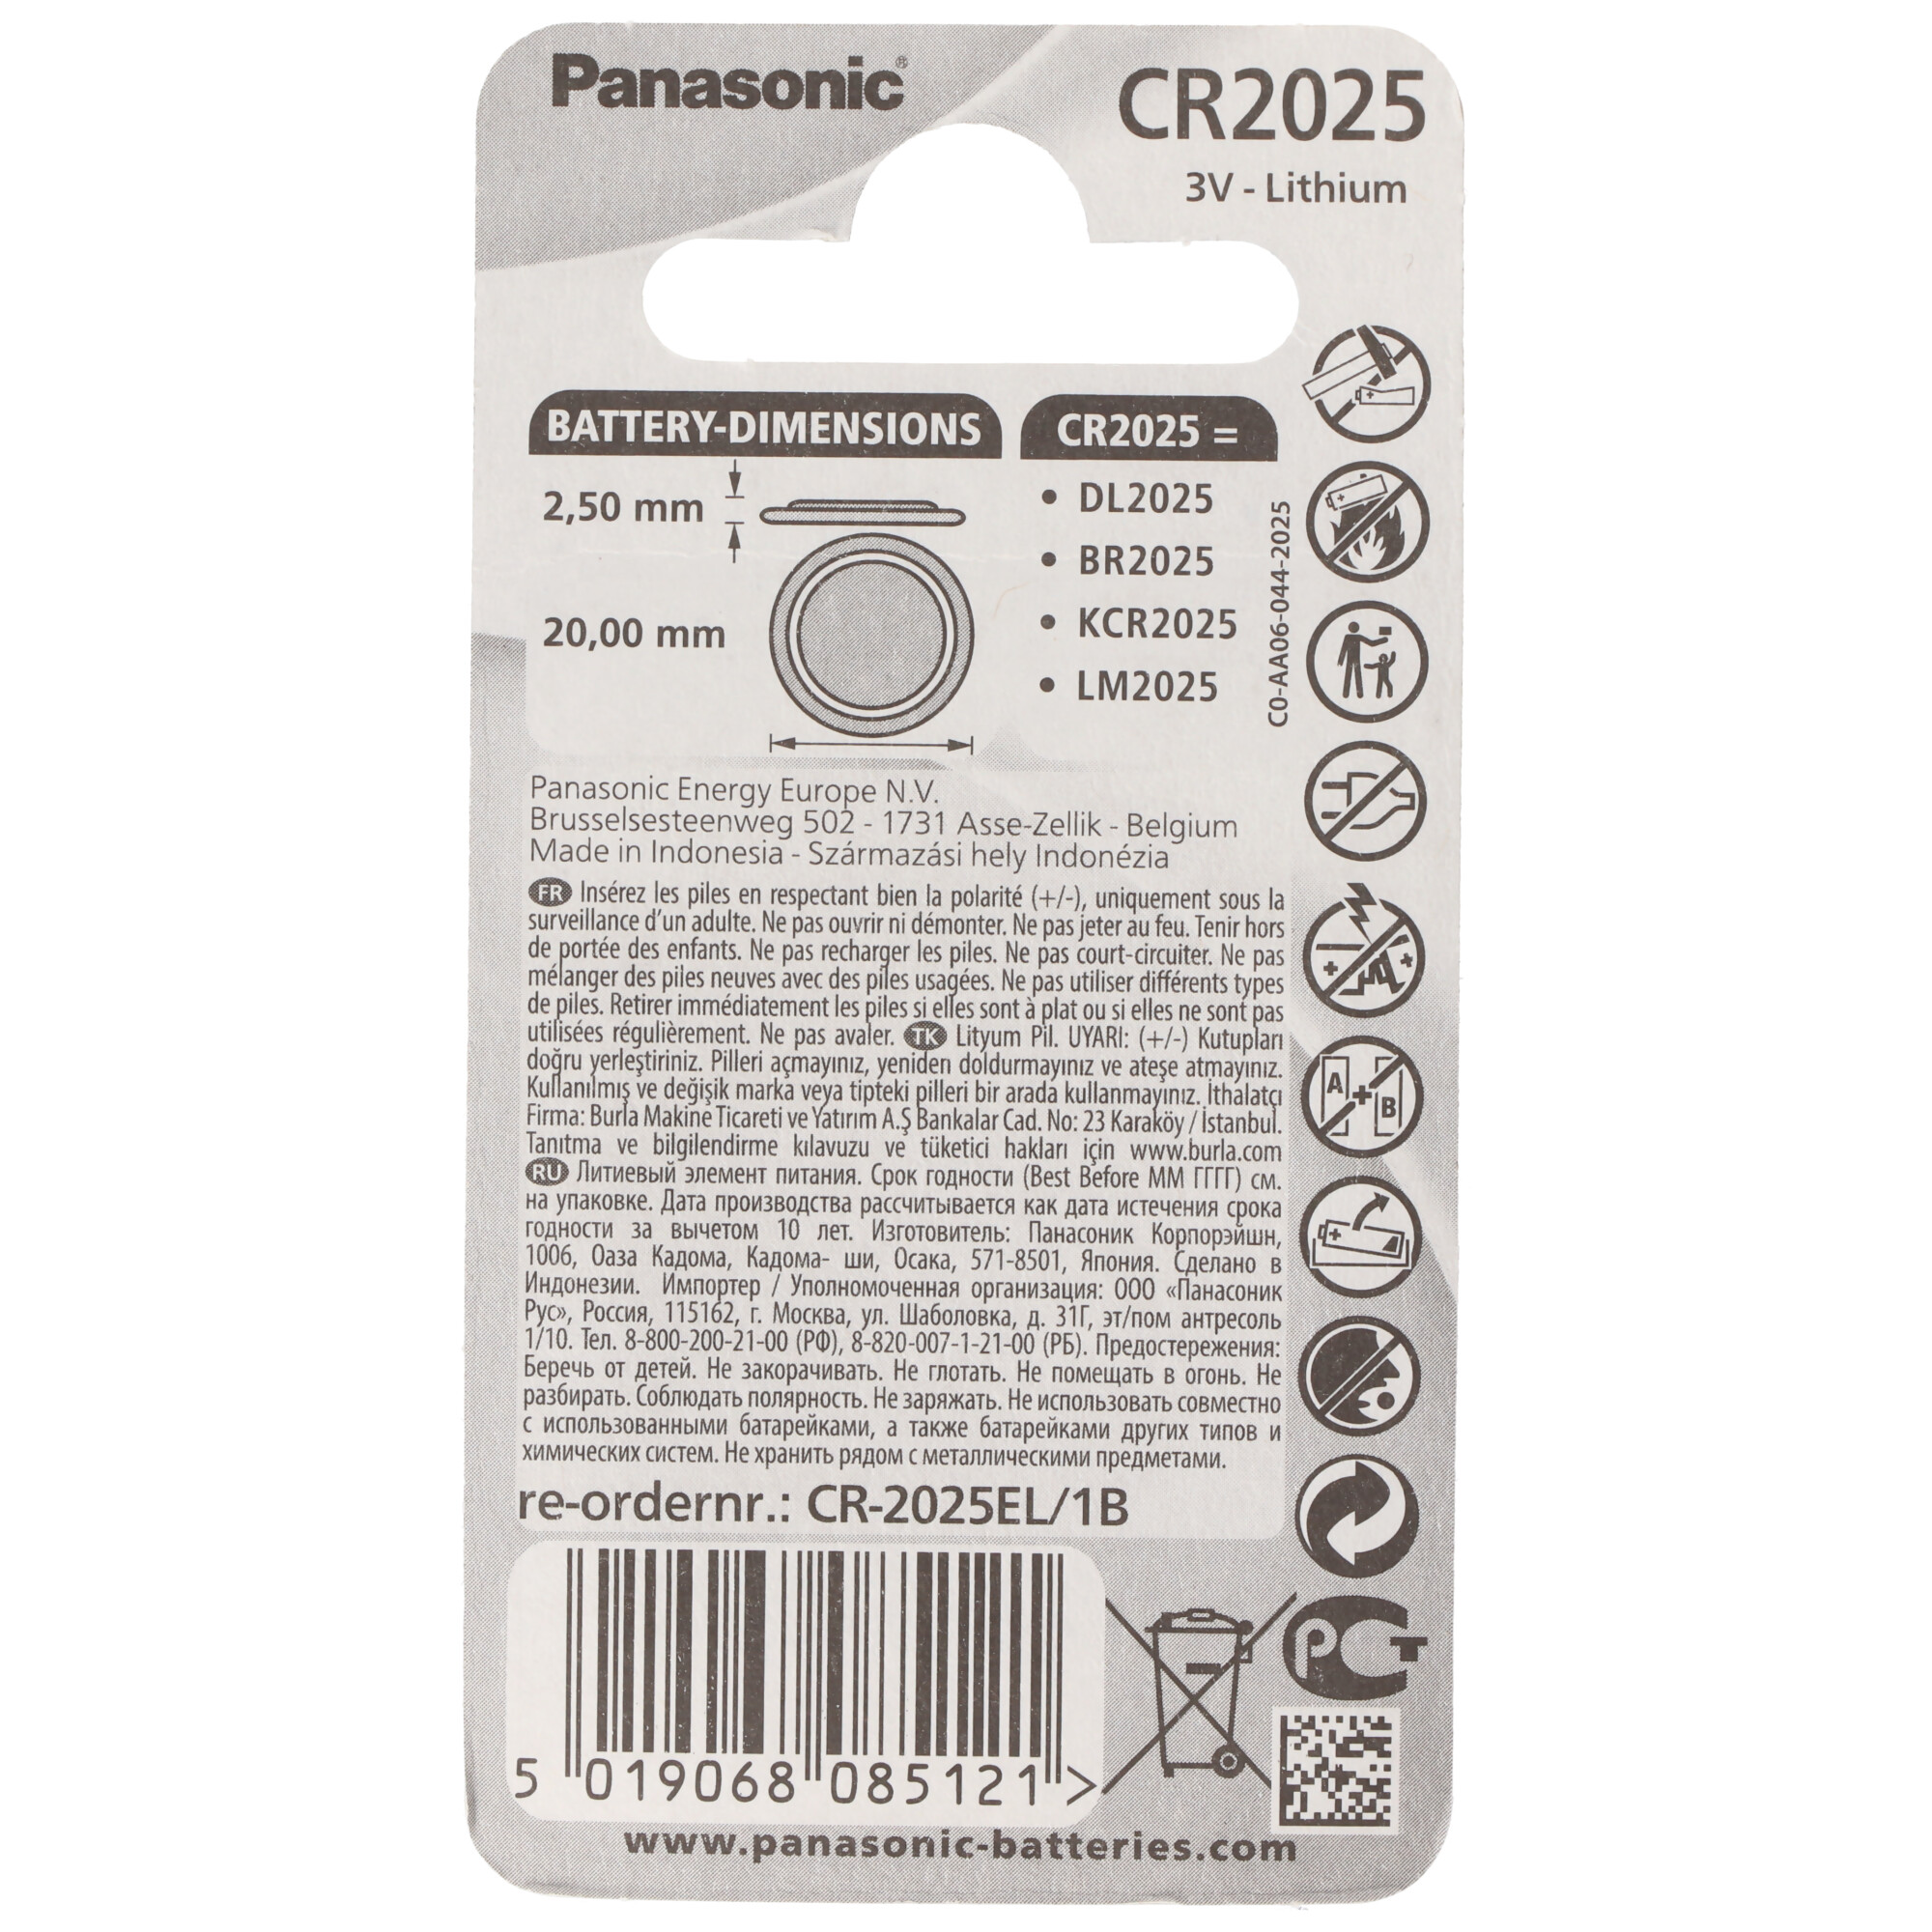 Panasonic CR2025 Lithium Batterie IEC CR 2025, 5019068085121